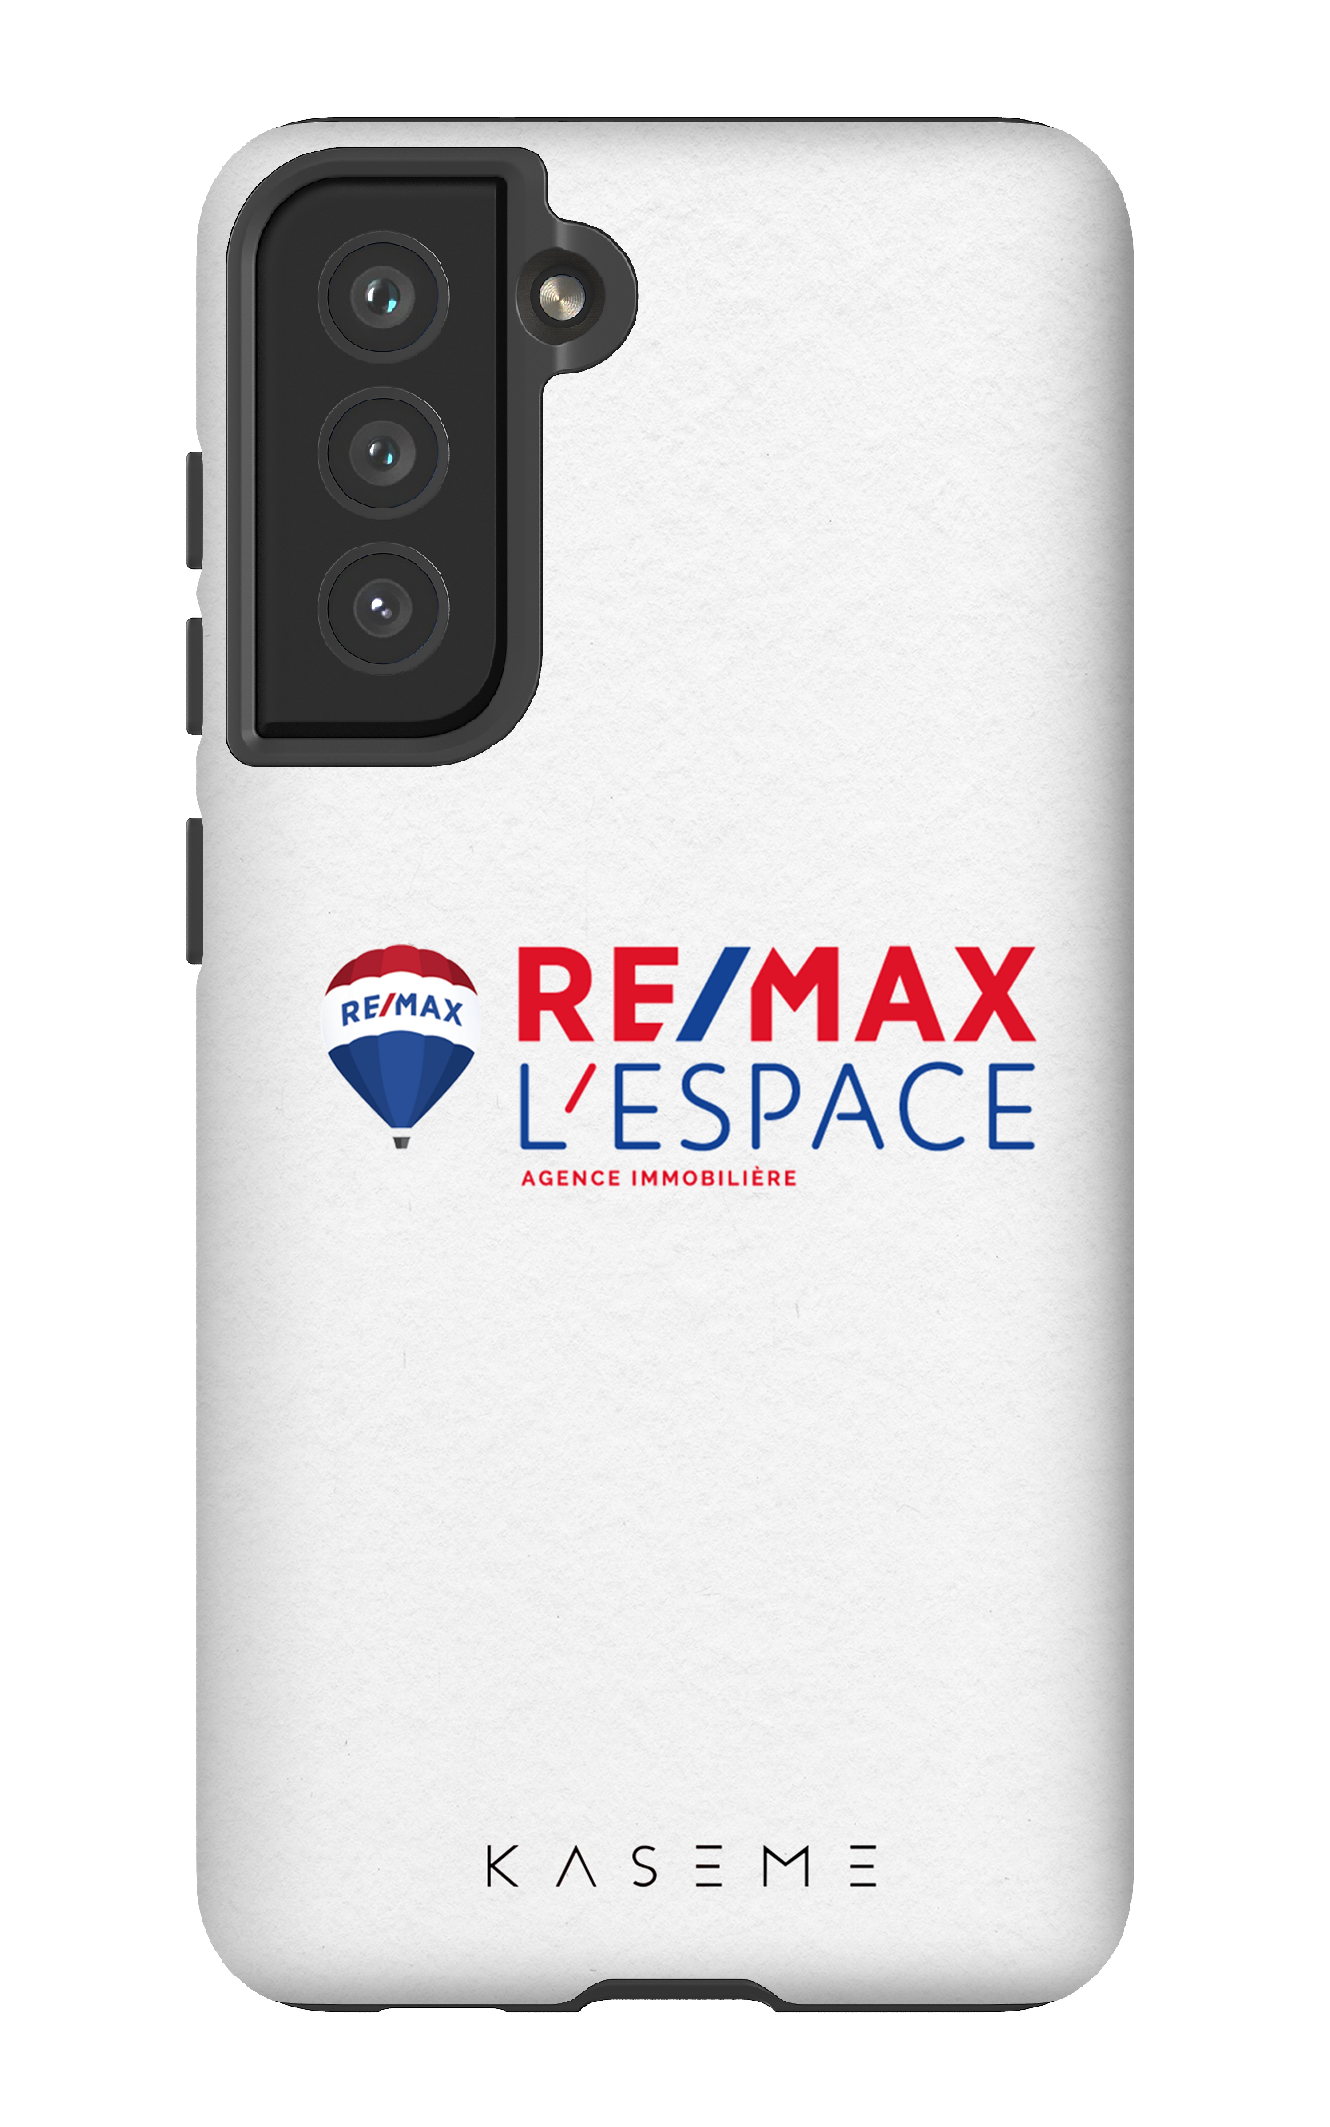 Remax L'Espace Blanc - Galaxy S21FE